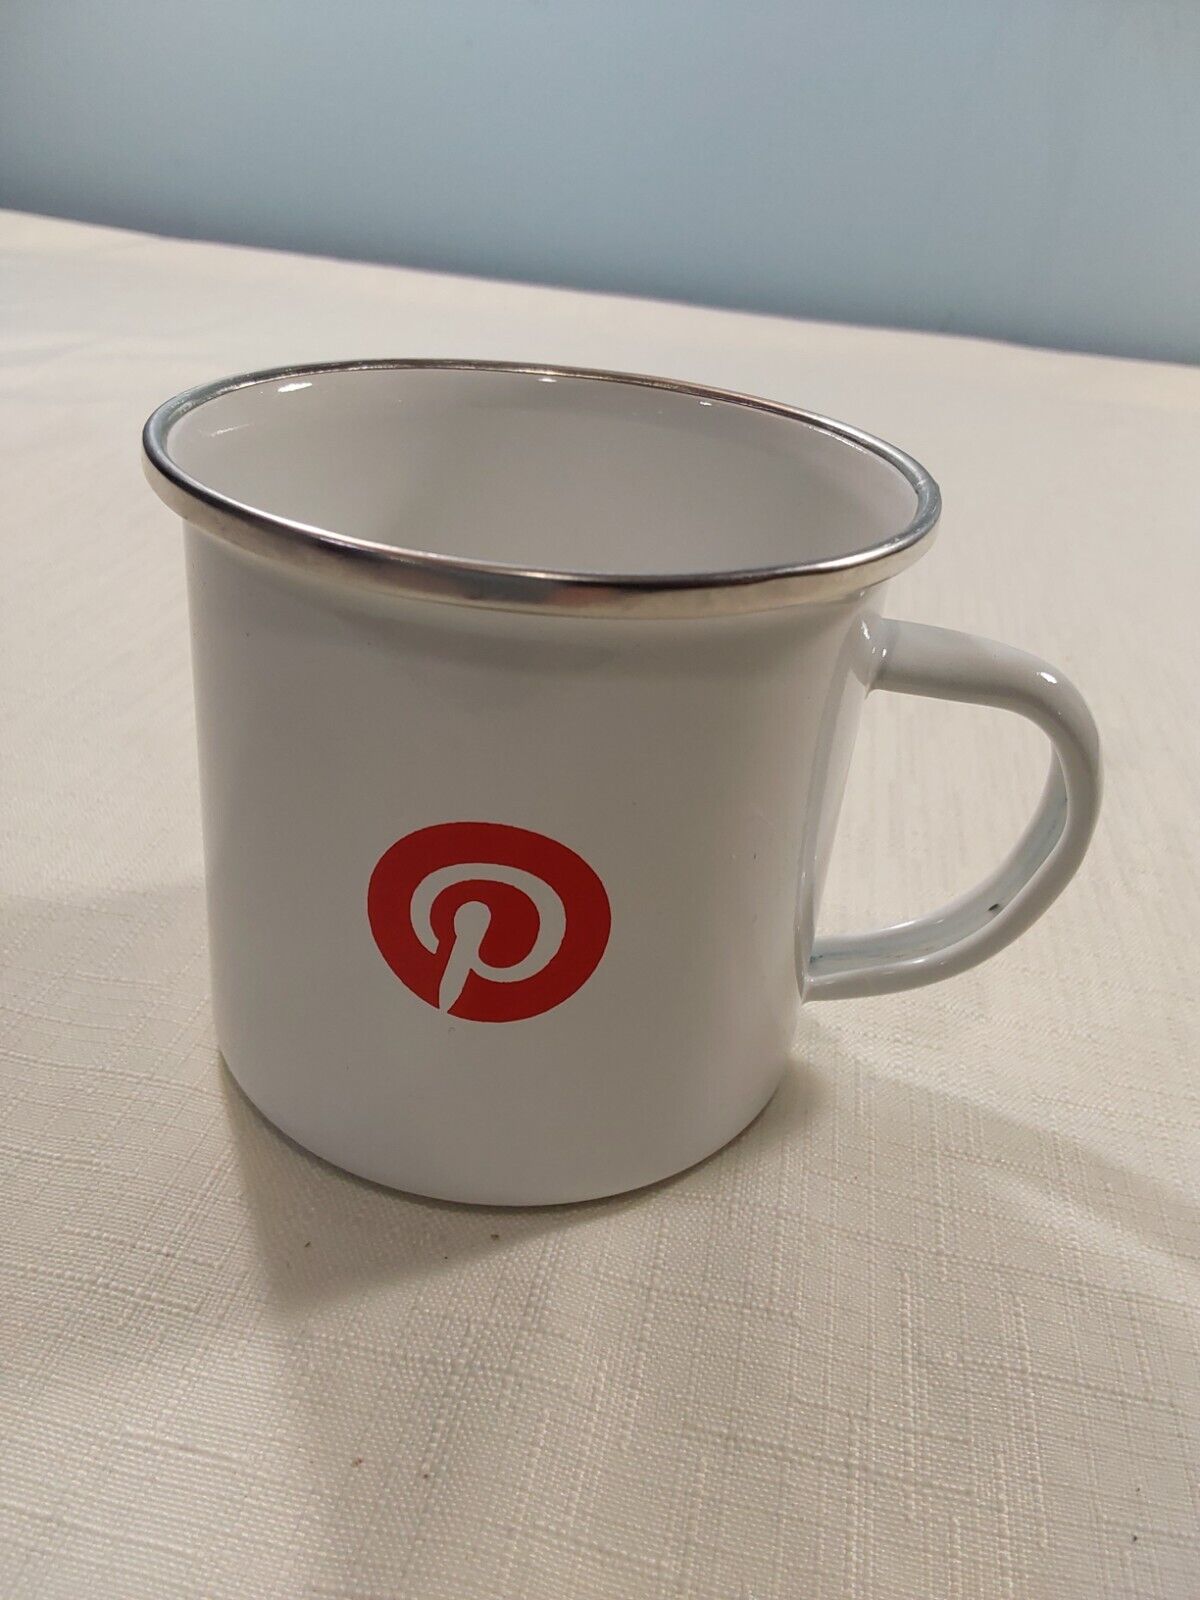 Pinterest Logo Stainless Steel Ceramic Coated Coffee Mug Tea Espresso